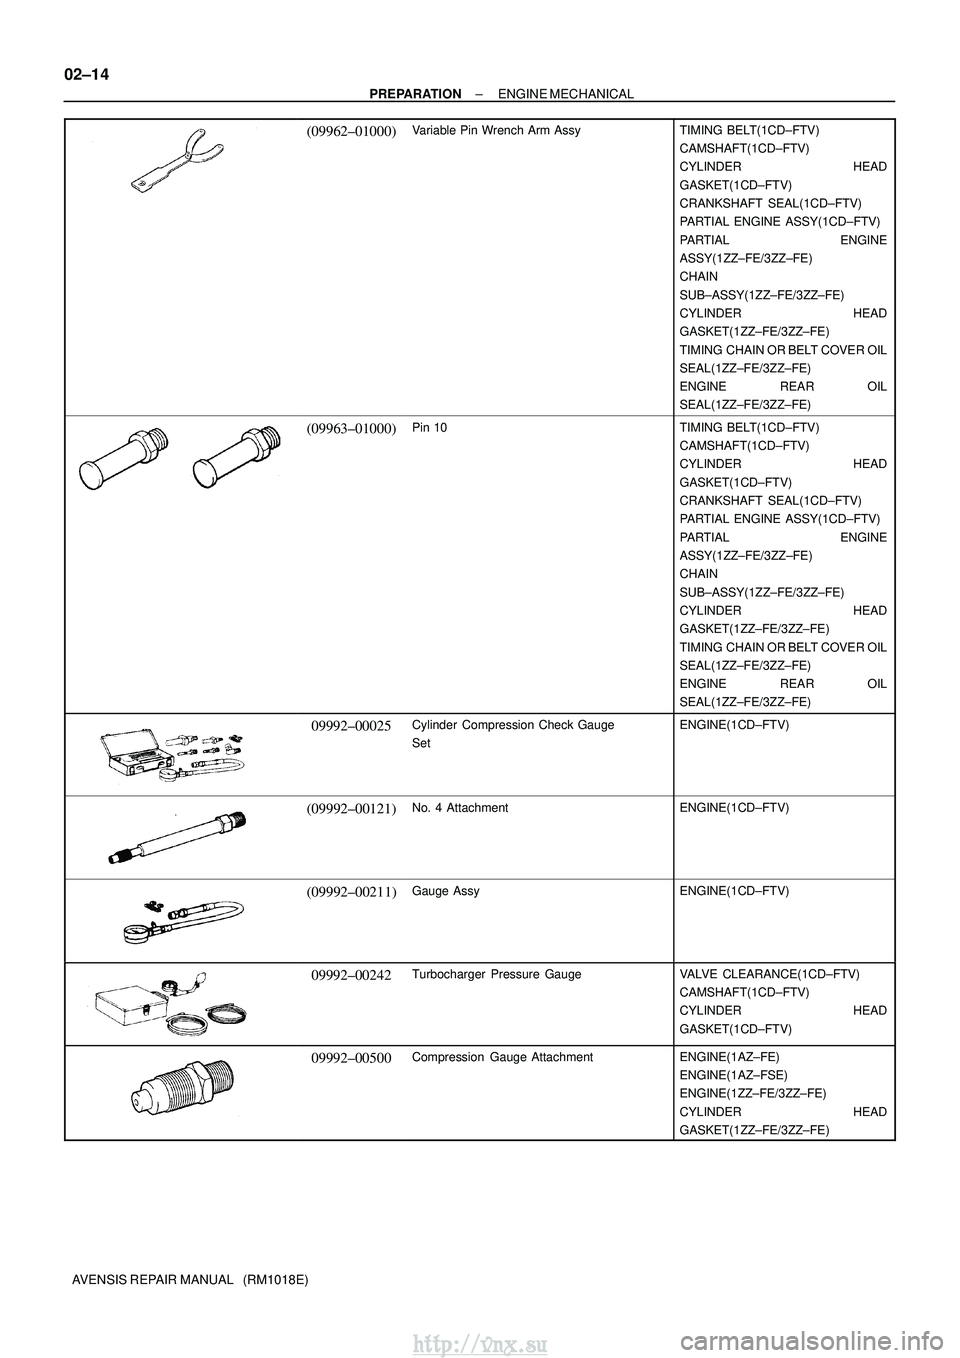 TOYOTA AVENSIS 2003  Service Repair Manual 02±14
±
PREPARATION ENGINE MECHANICAL
AVENSIS REPAIR MANUAL   (RM1018E)
(09962±01000)Variable Pin Wrench Arm AssyTIMING BELT(1CD±FTV)
CAMSHAFT(1CD±FTV)
CYLINDER HEAD
GASKET(1CD±FTV)
CRANKSHAFT S